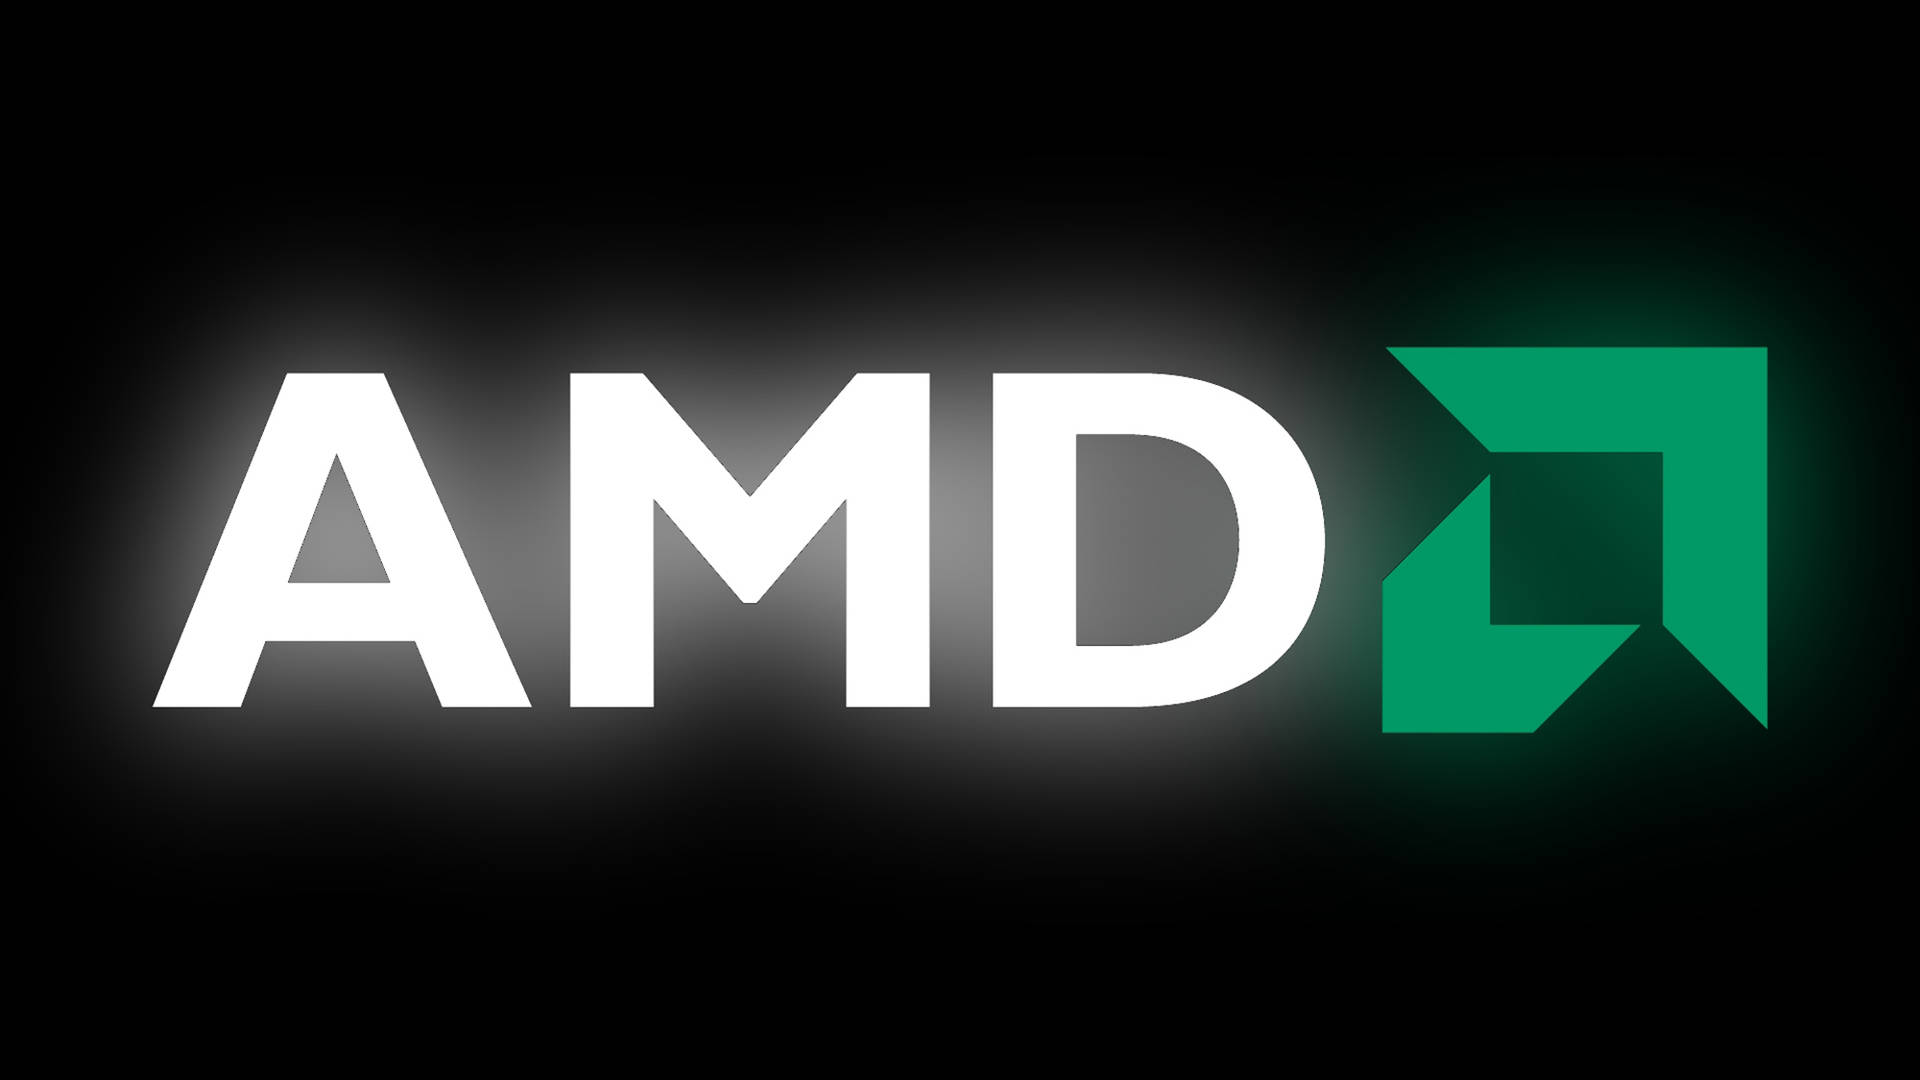 Sleek Glowing Amd Logo Background